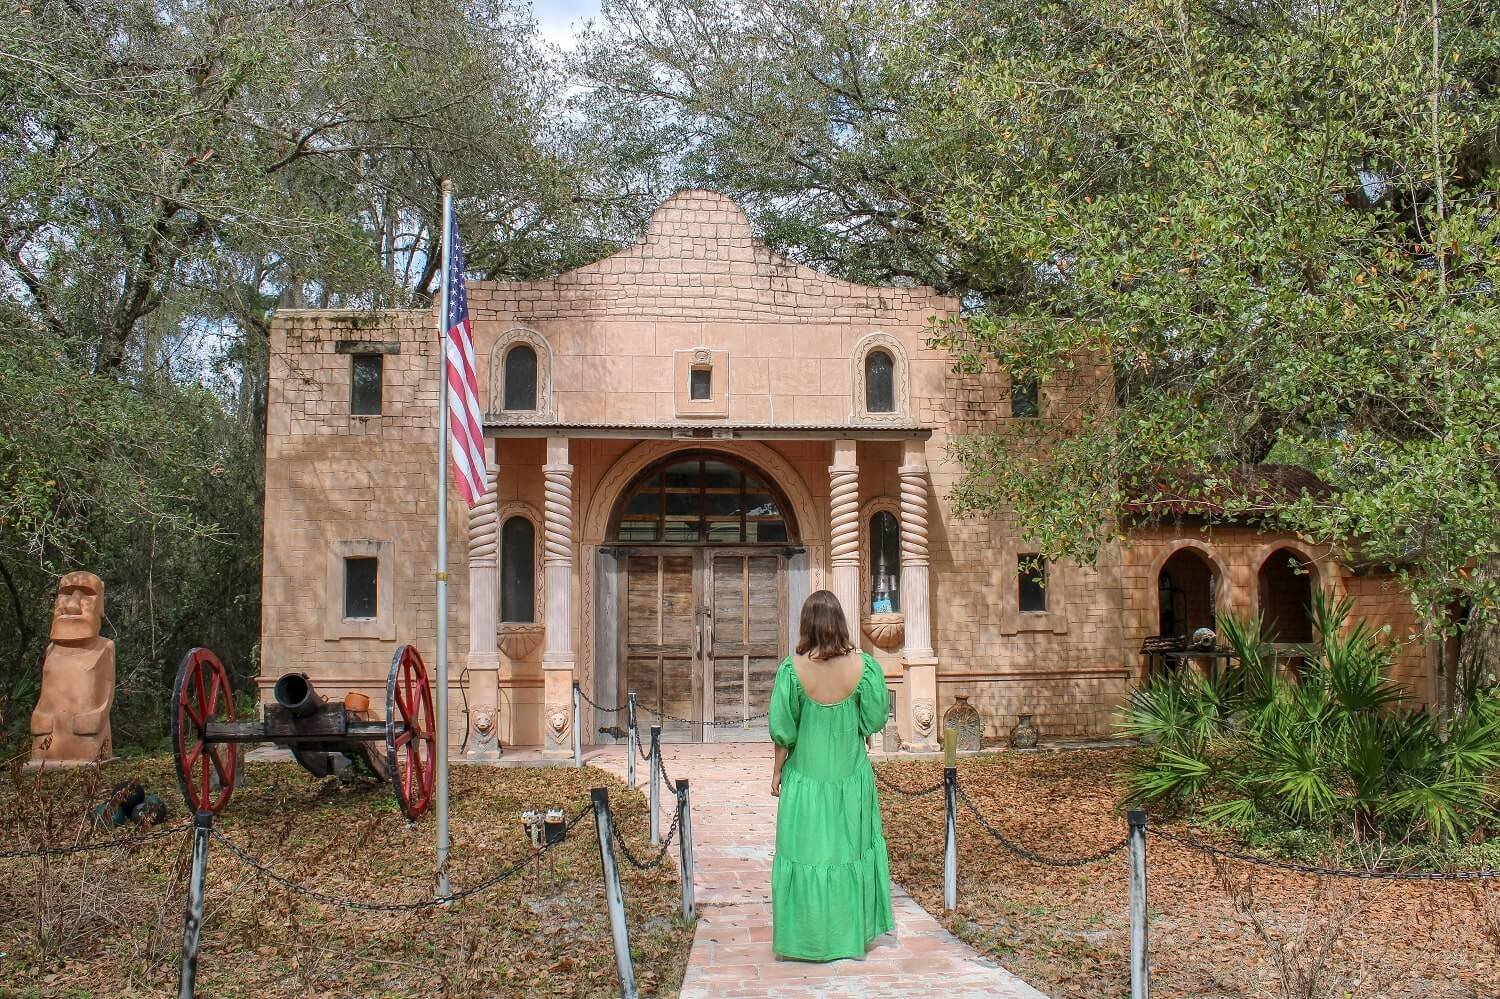 Solomon's Castle in Ona, Florida, Alamo building